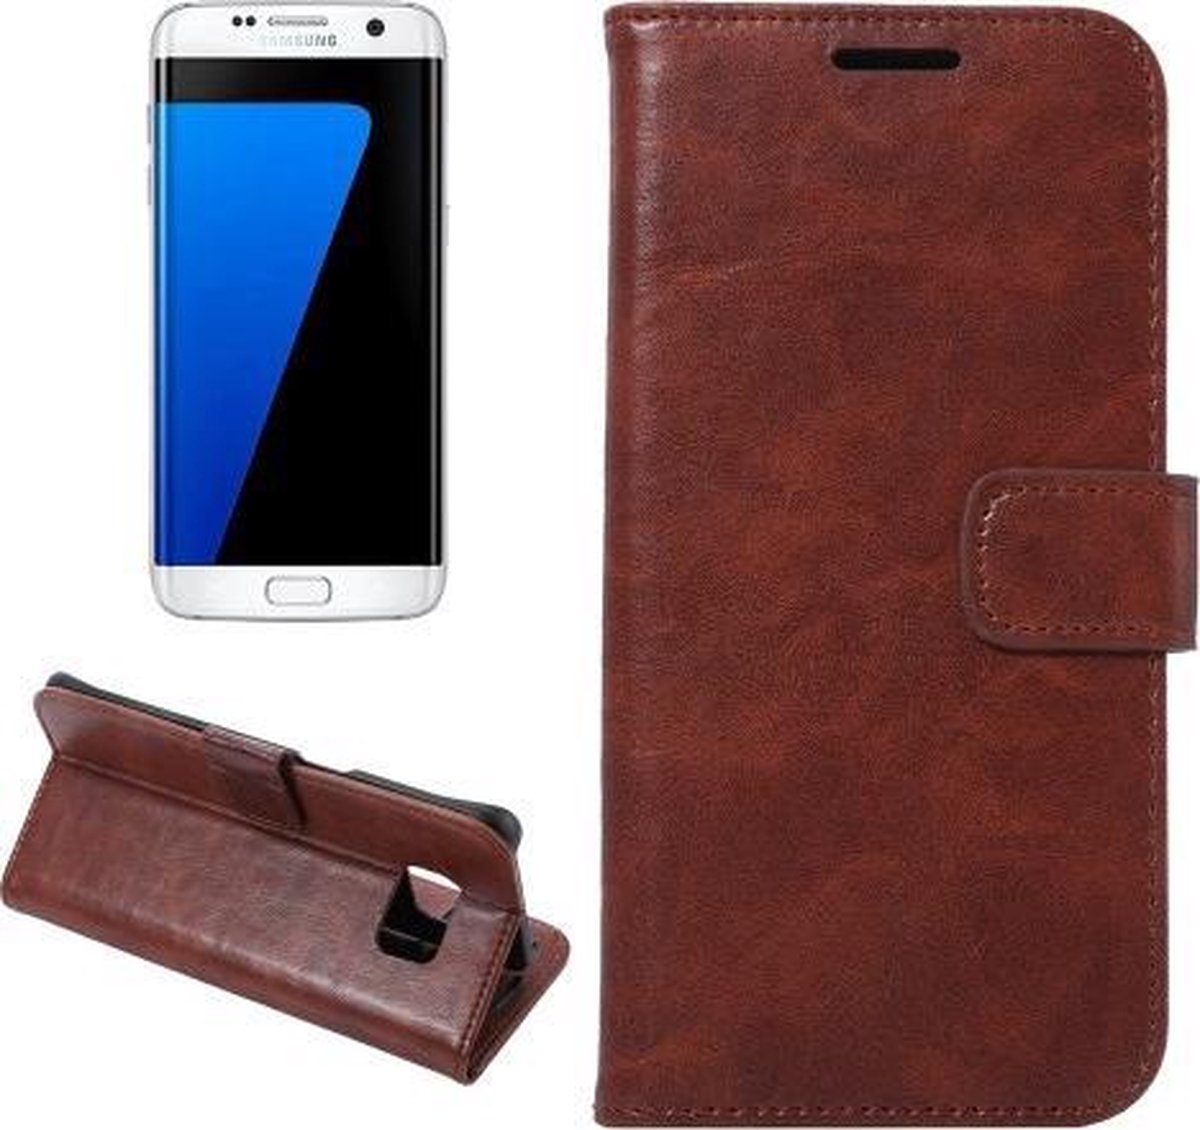 Celltex Cover wallet case hoesje Samsung Galaxy S7 edge bruin